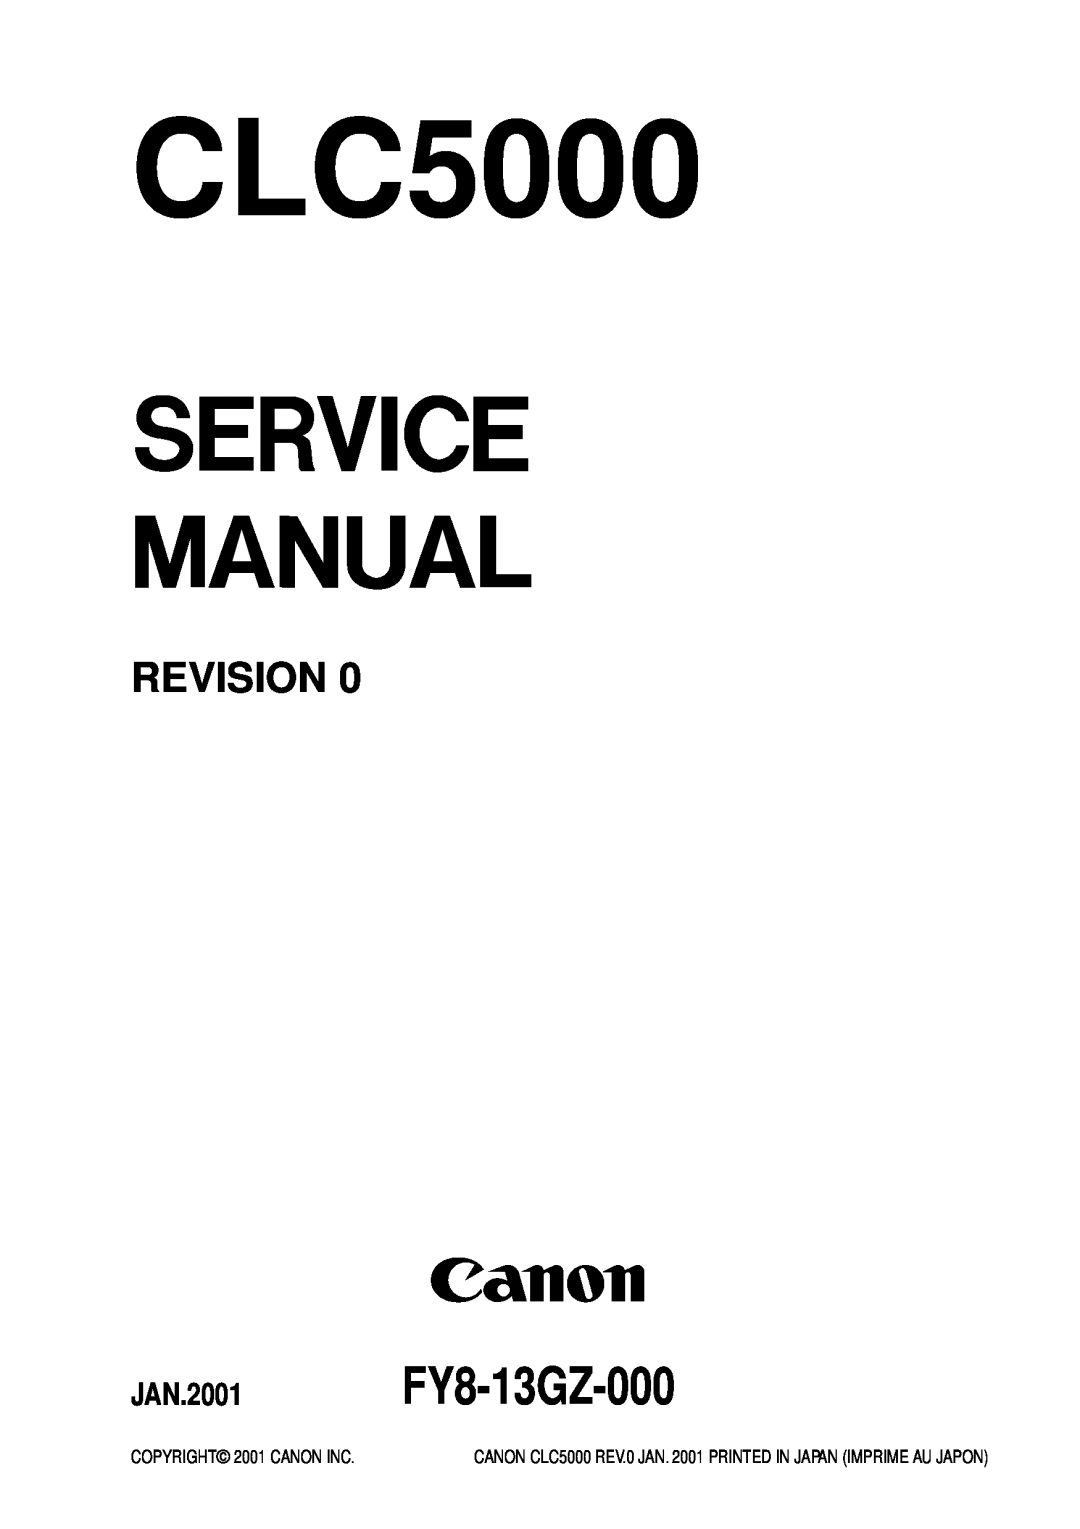 Canon manual CLC5000, JAN.2001FY8-13GZ-000, Revision, COPYRIGHT 2001 CANON INC 